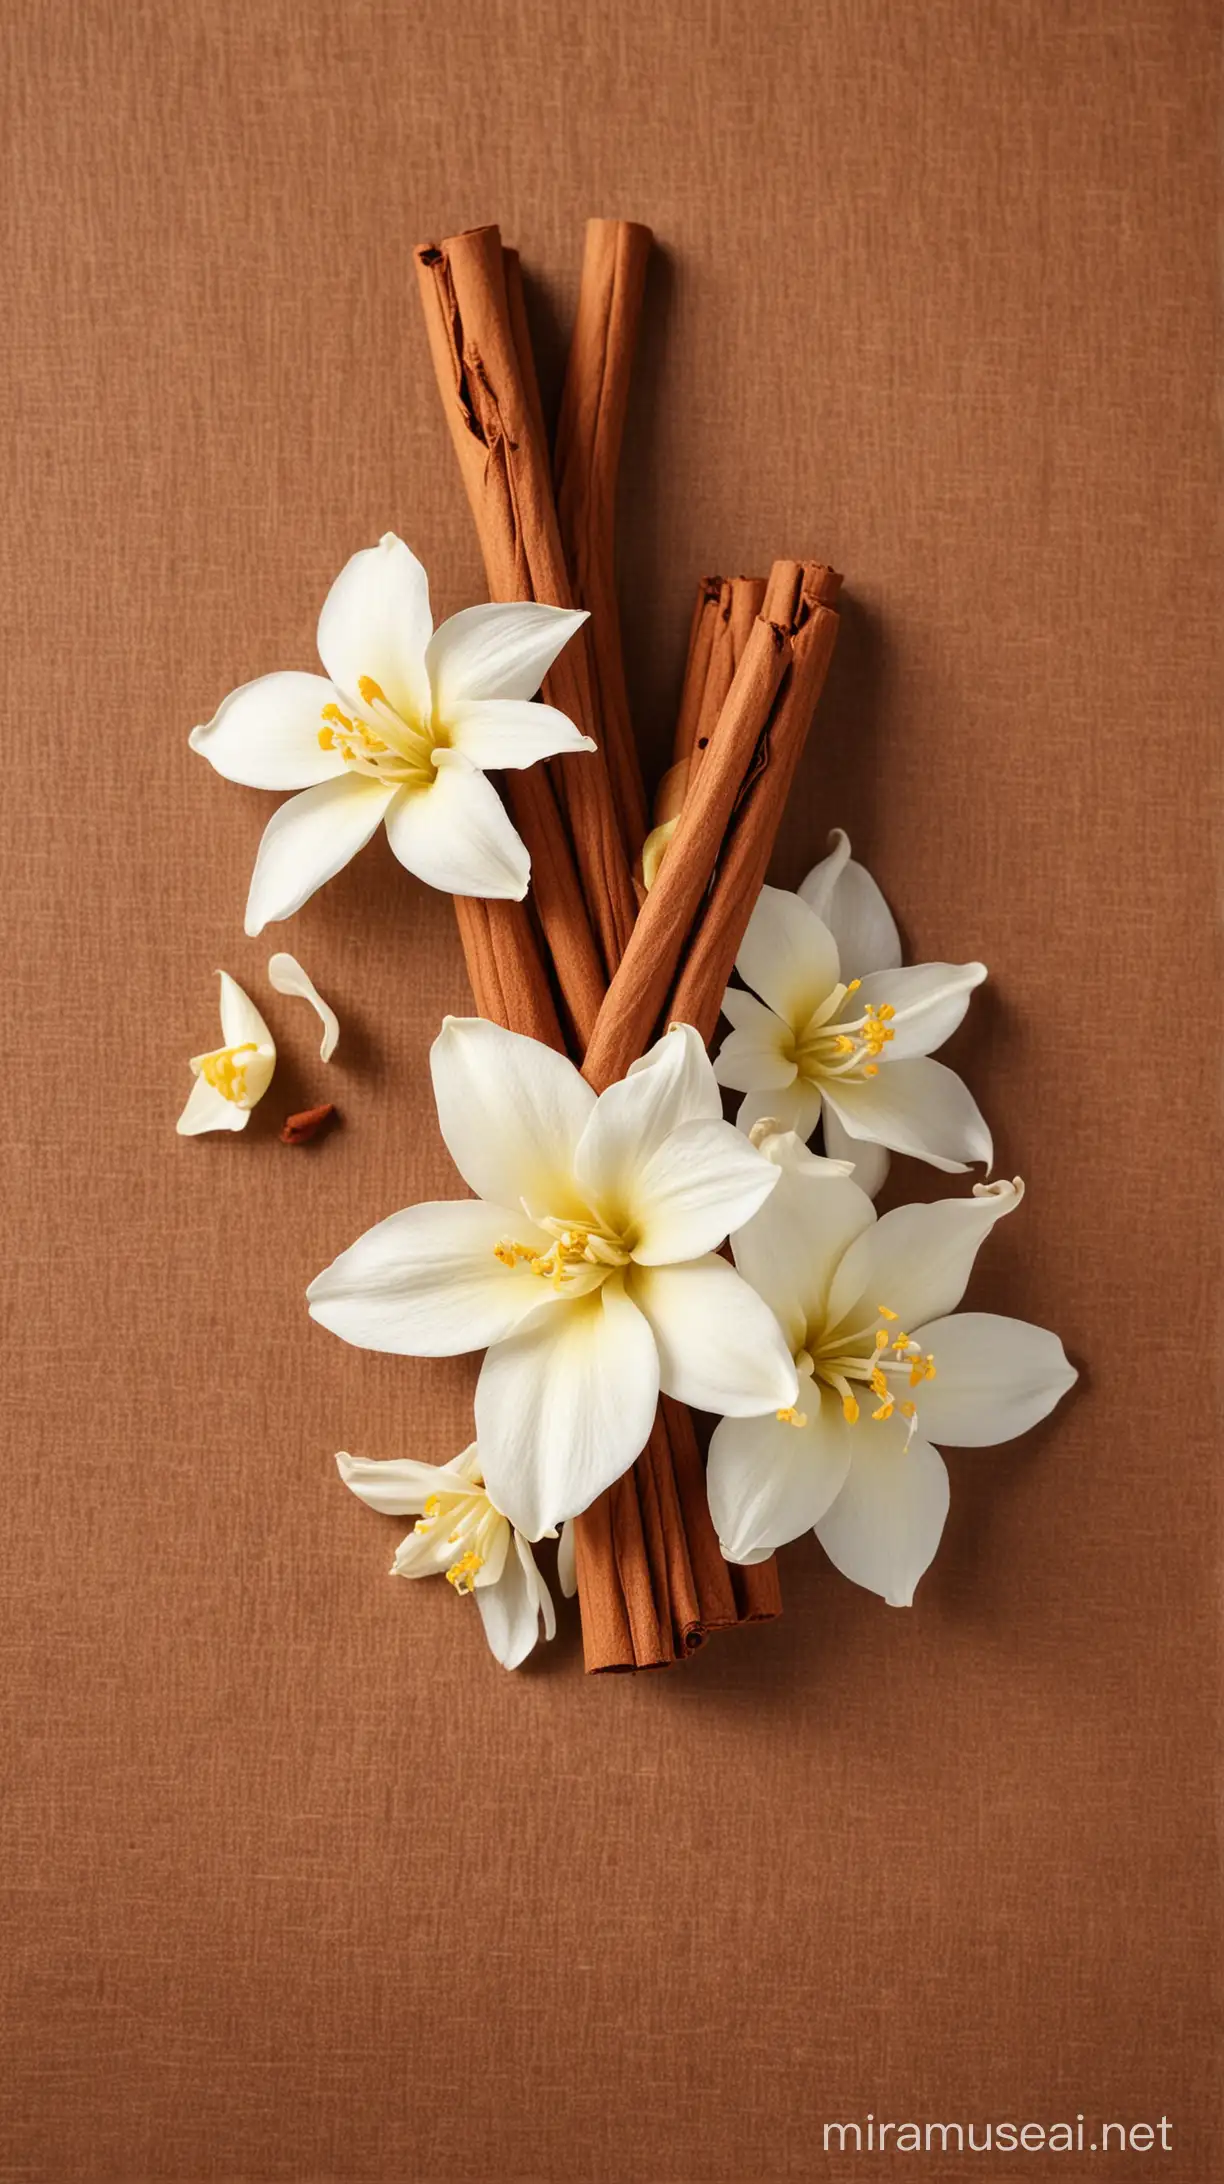 Delicate Vanilla Flowers with Cinnamon Background Elegant Ad Aesthetics